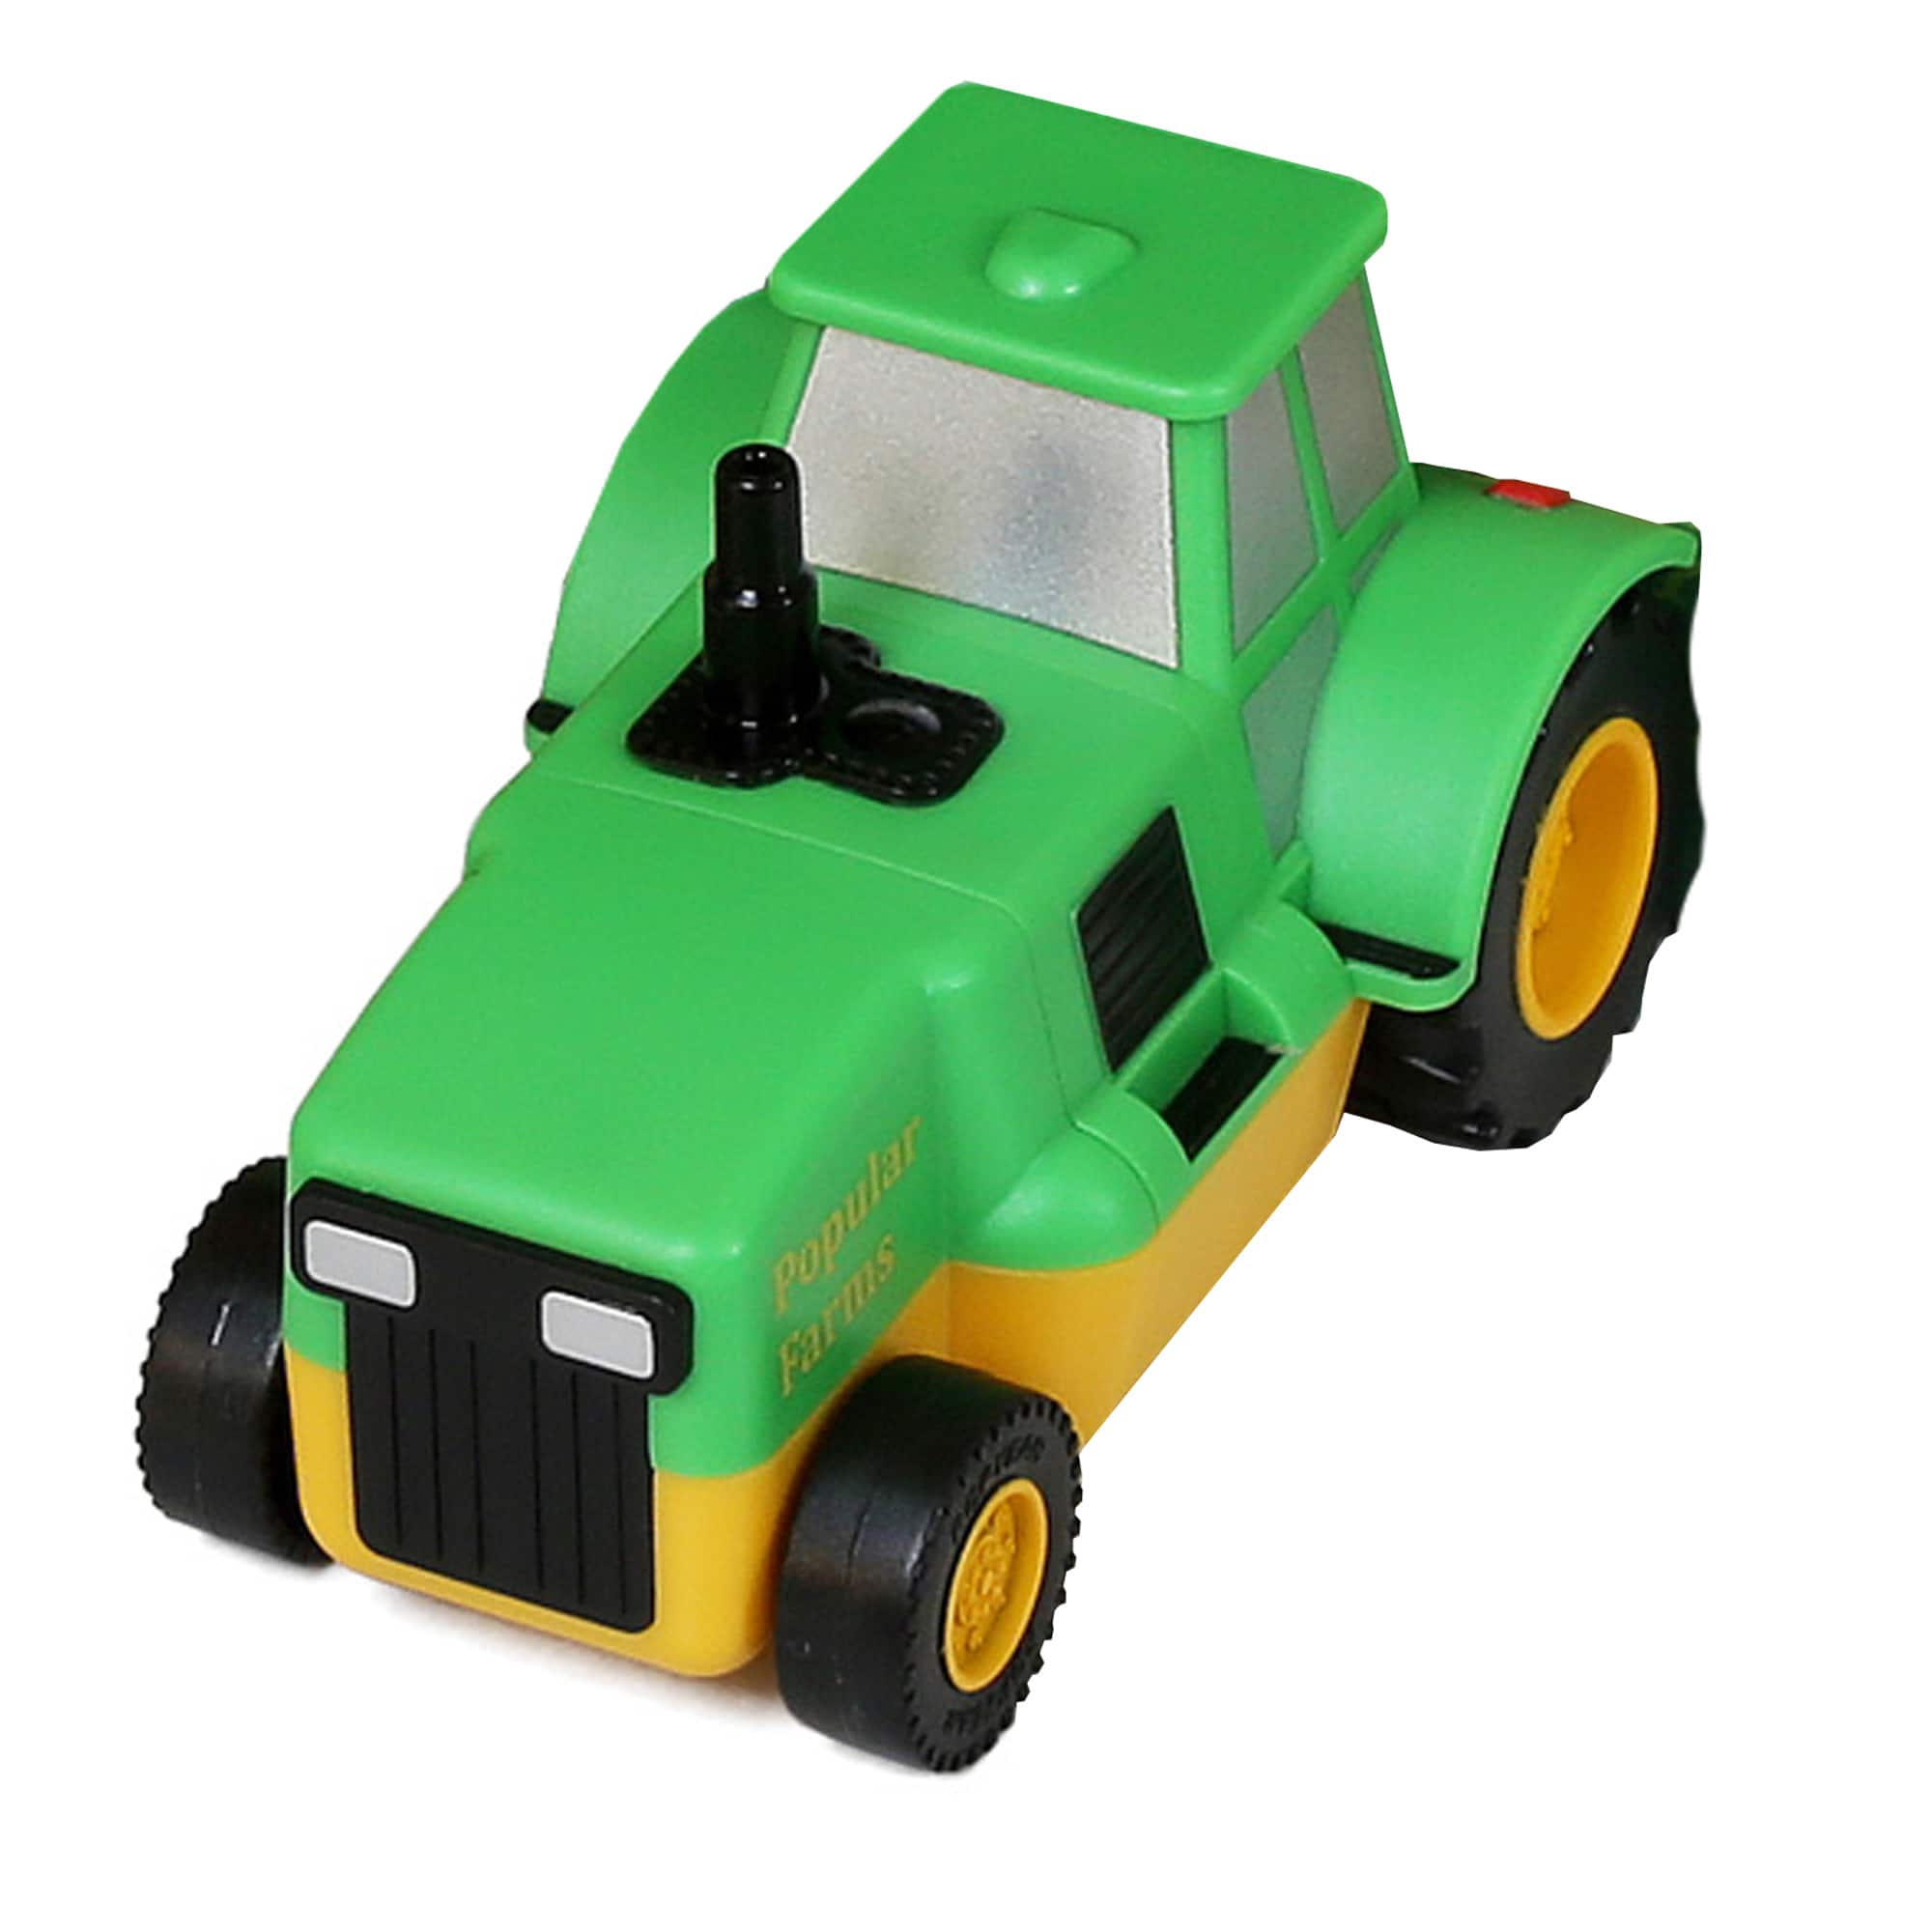 Popular Playthings&#xAE; Magnetic Mix or Match&#xAE; Farm Vehicles Play Set